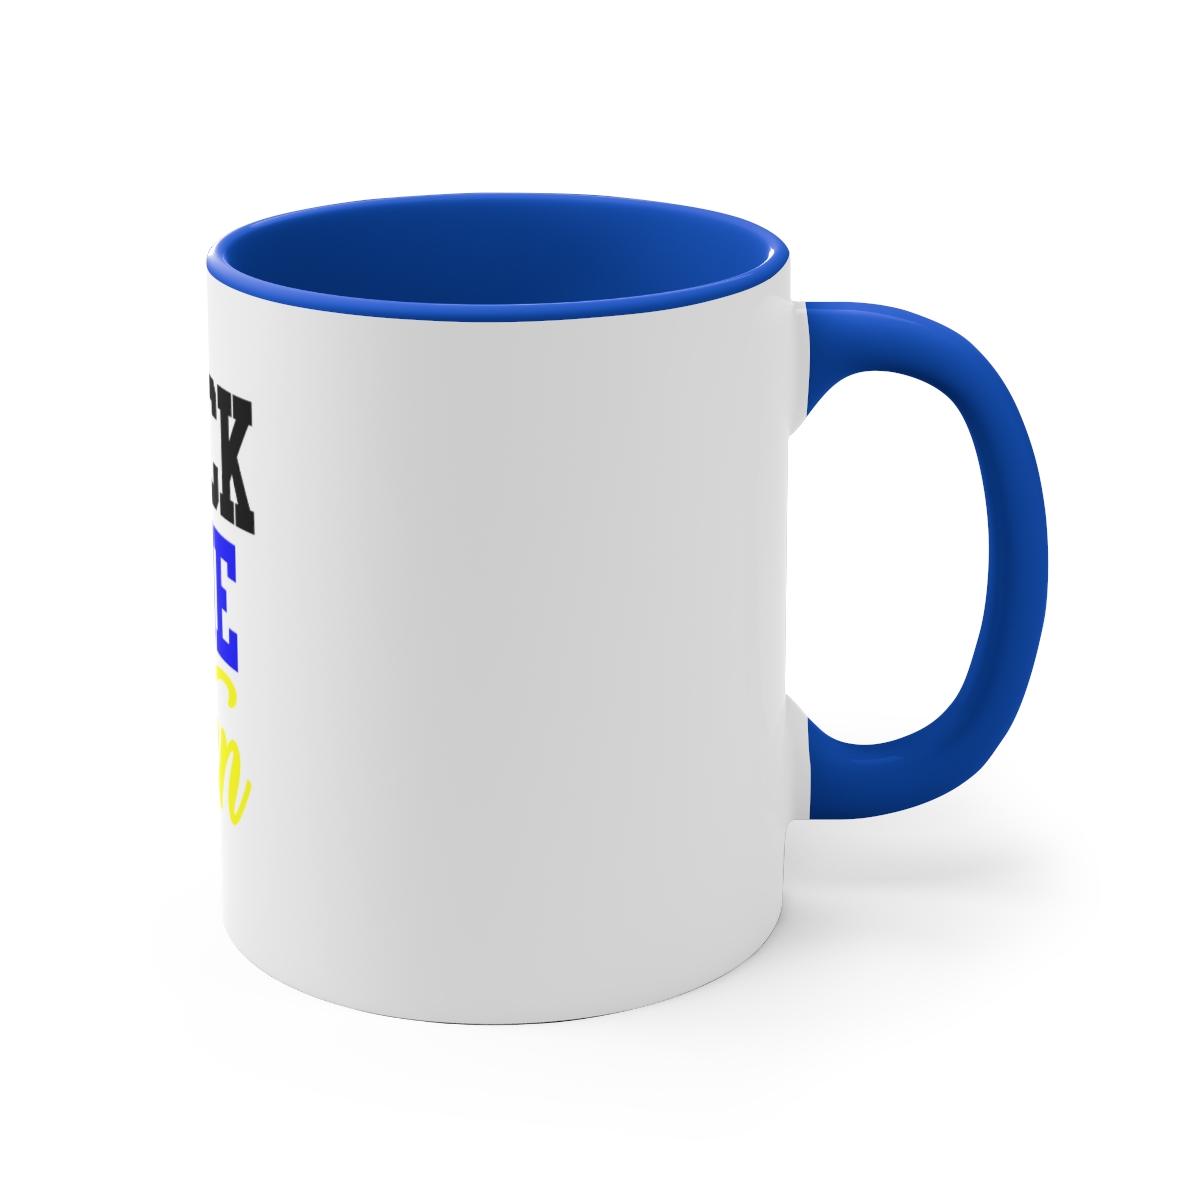 The Perfect Mug product thumbnail image